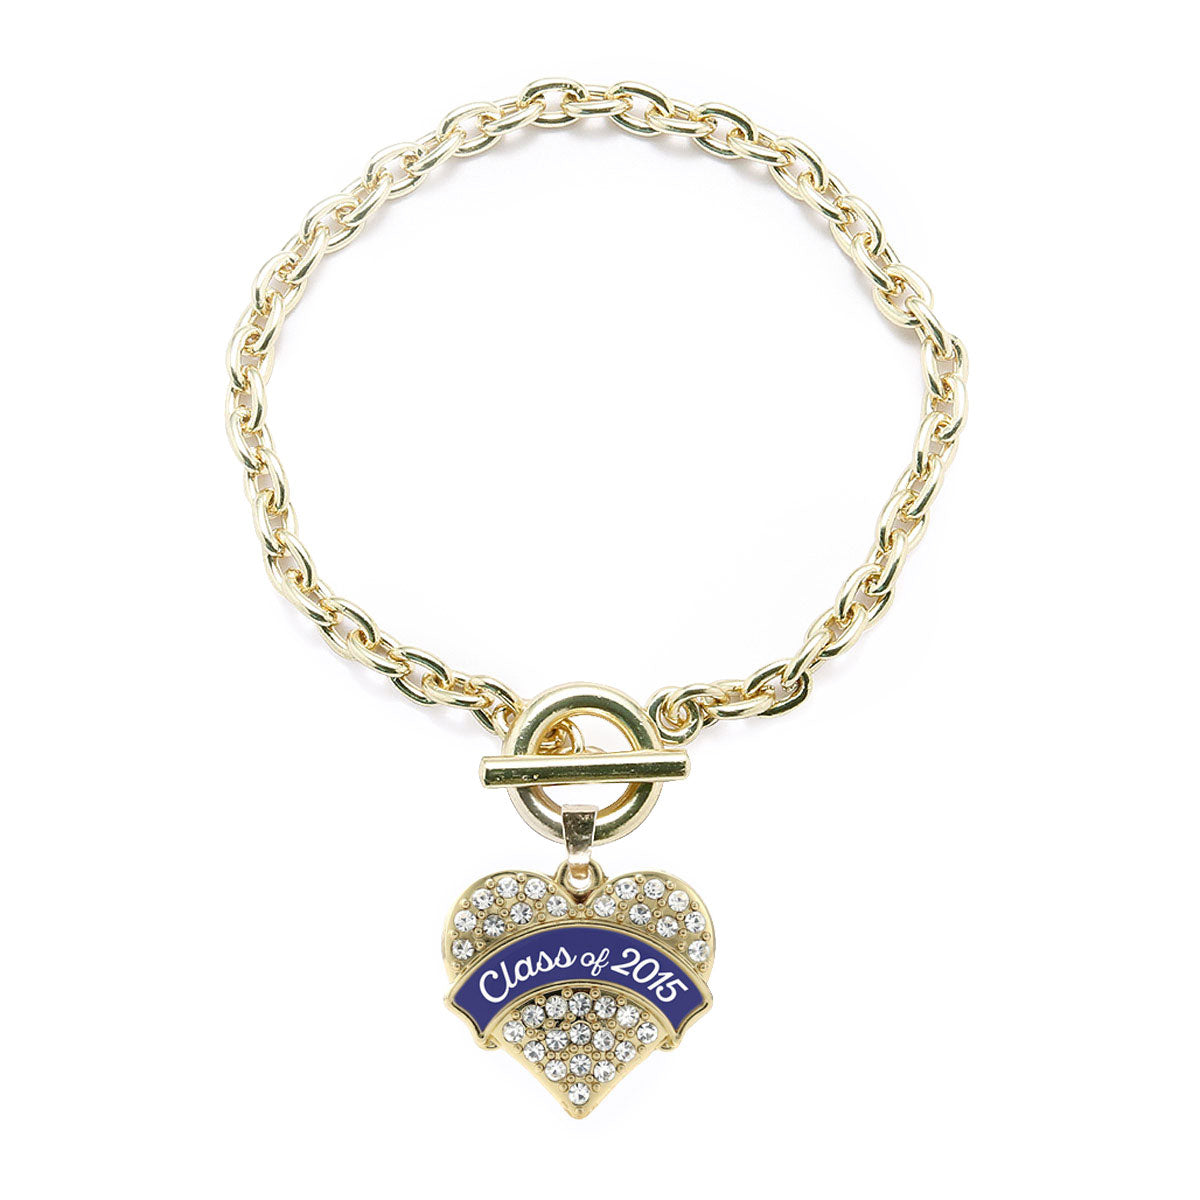 Gold Class of 2015 - Navy Pave Heart Charm Toggle Bracelet